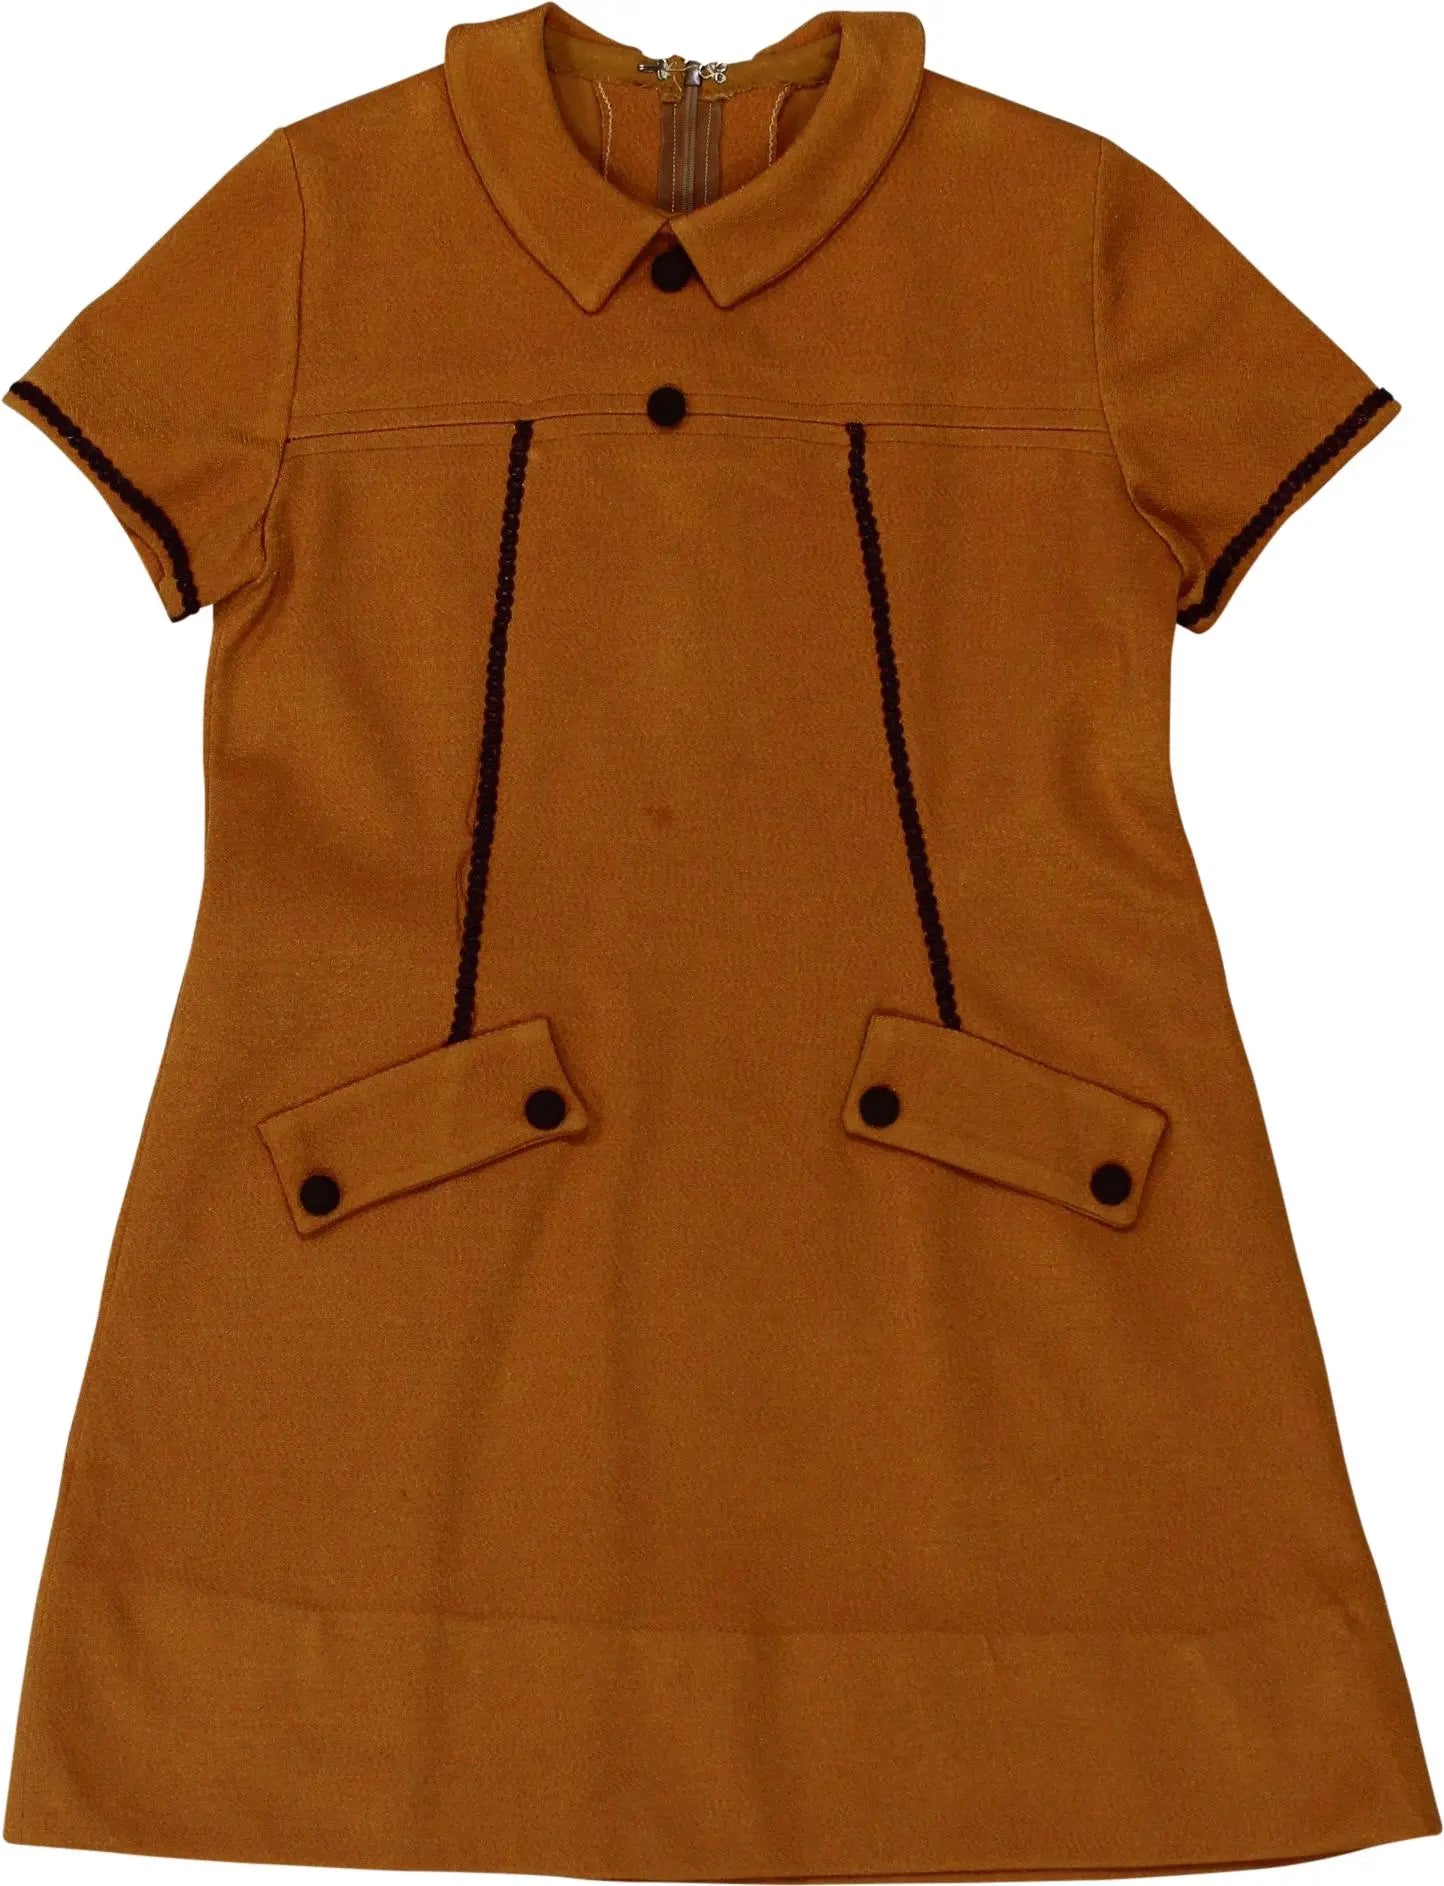 Handmade - Orange Dress- ThriftTale.com - Vintage and second handclothing